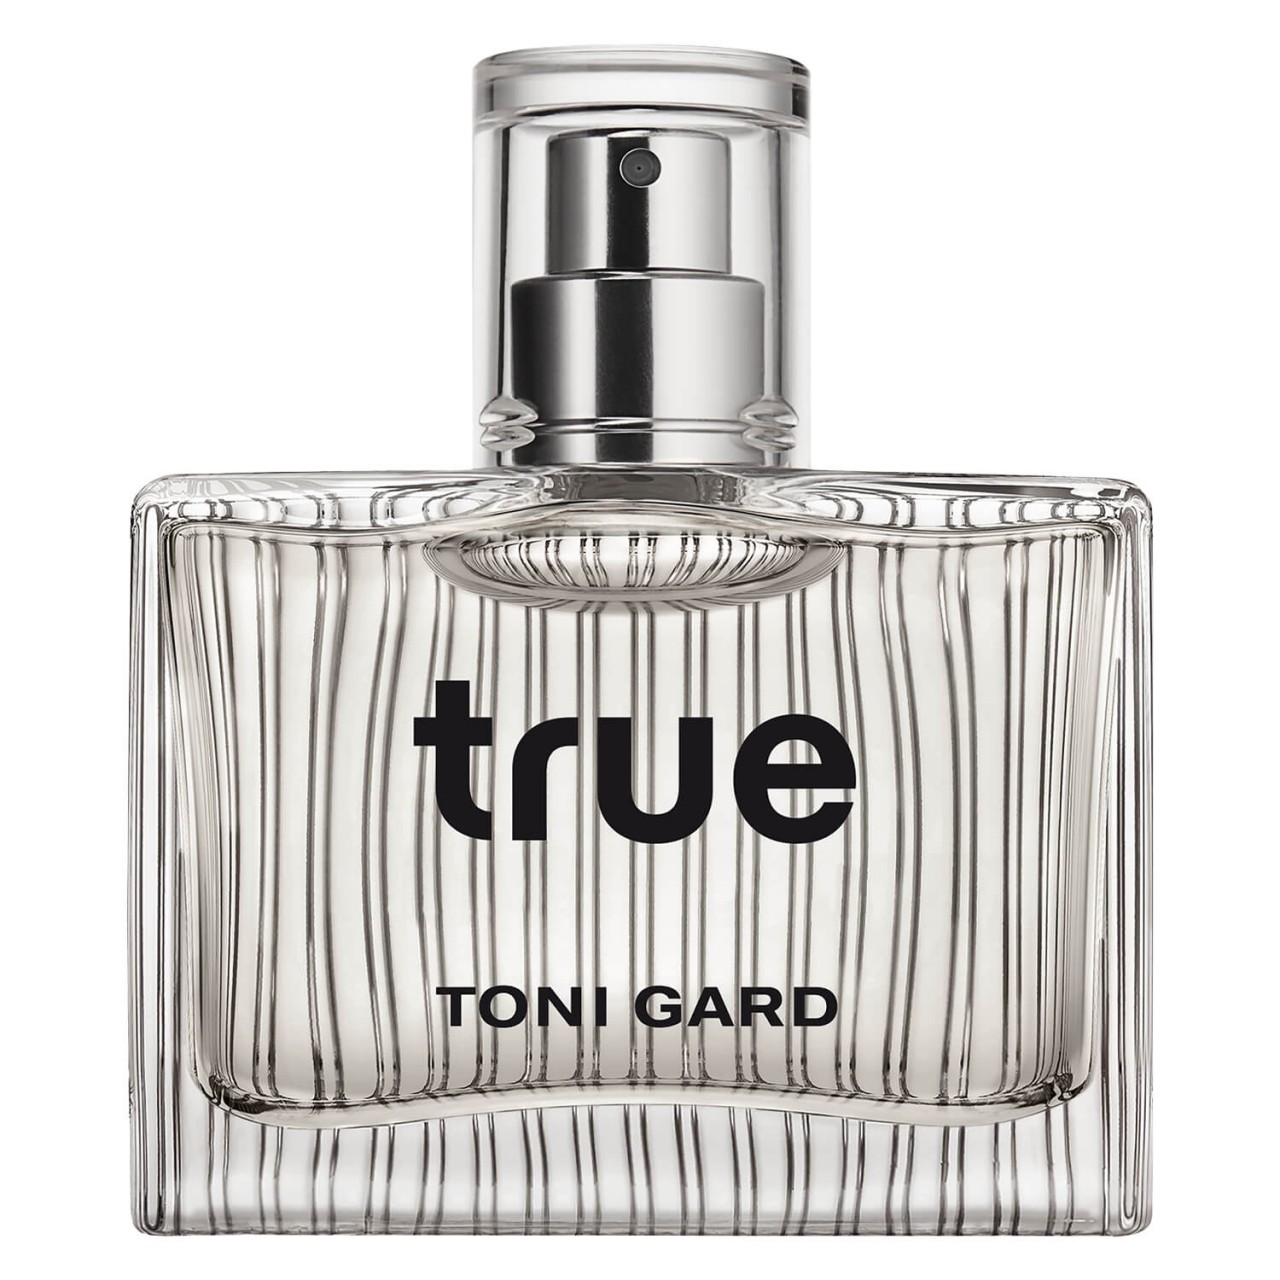 TONI GARD - True Woman Eau de Parfum von TONI GARD